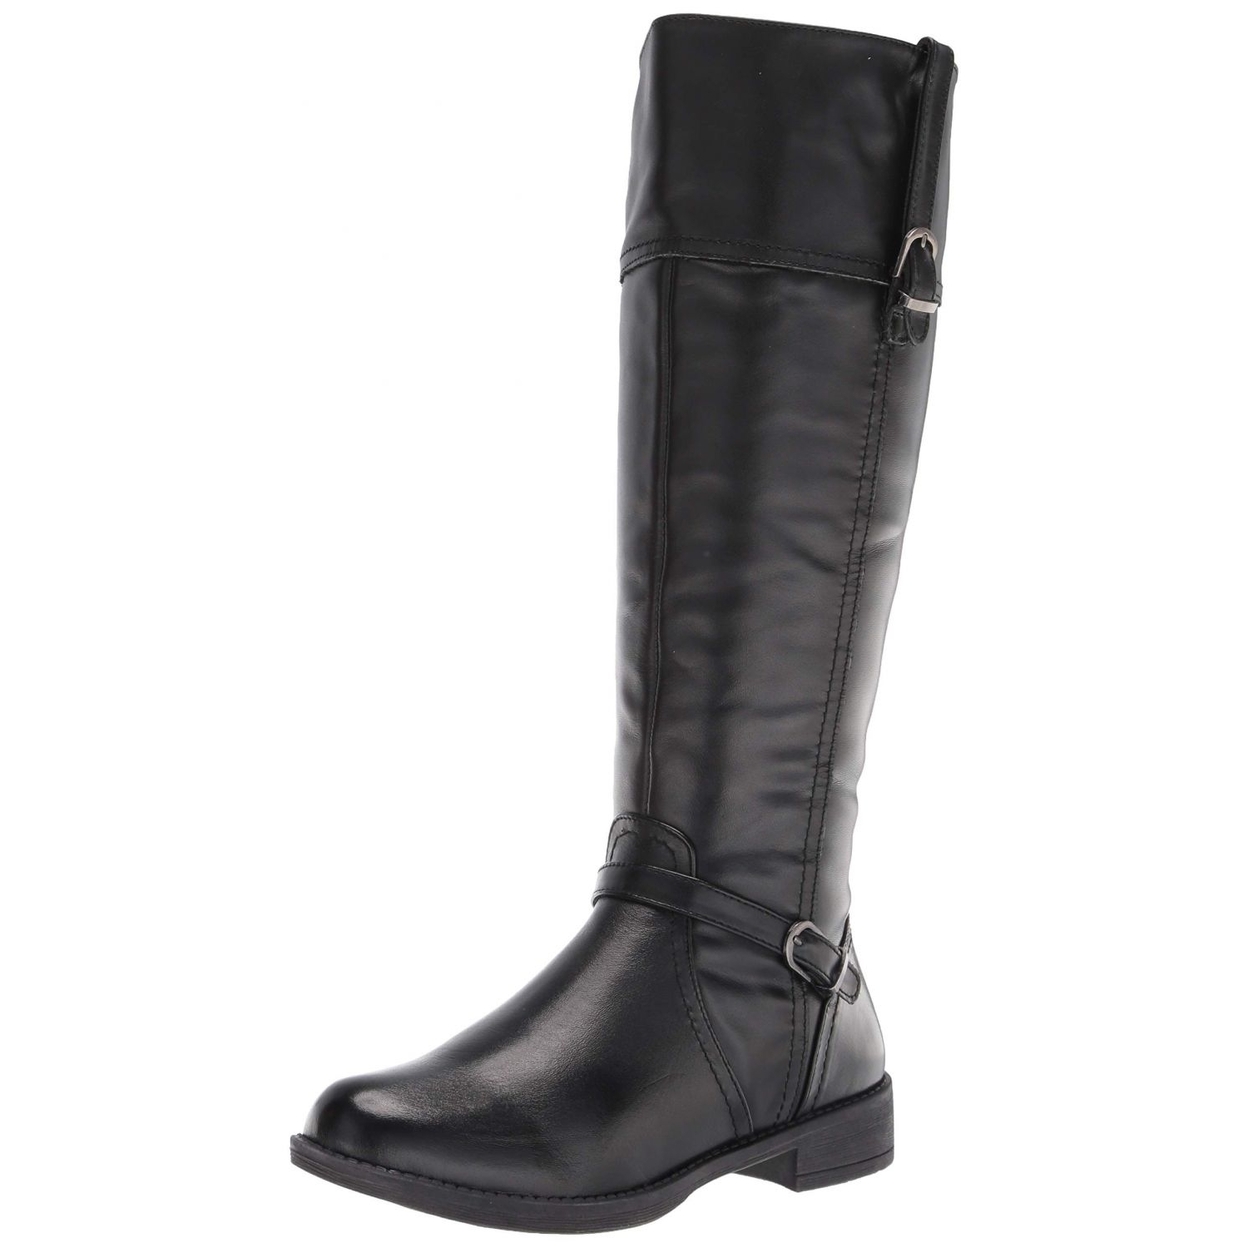 Propet Womens Tasha Zippered Casual Boots Knee High Low Heel 1-2 - Black BROWN - BROWN, 10 X-Wide